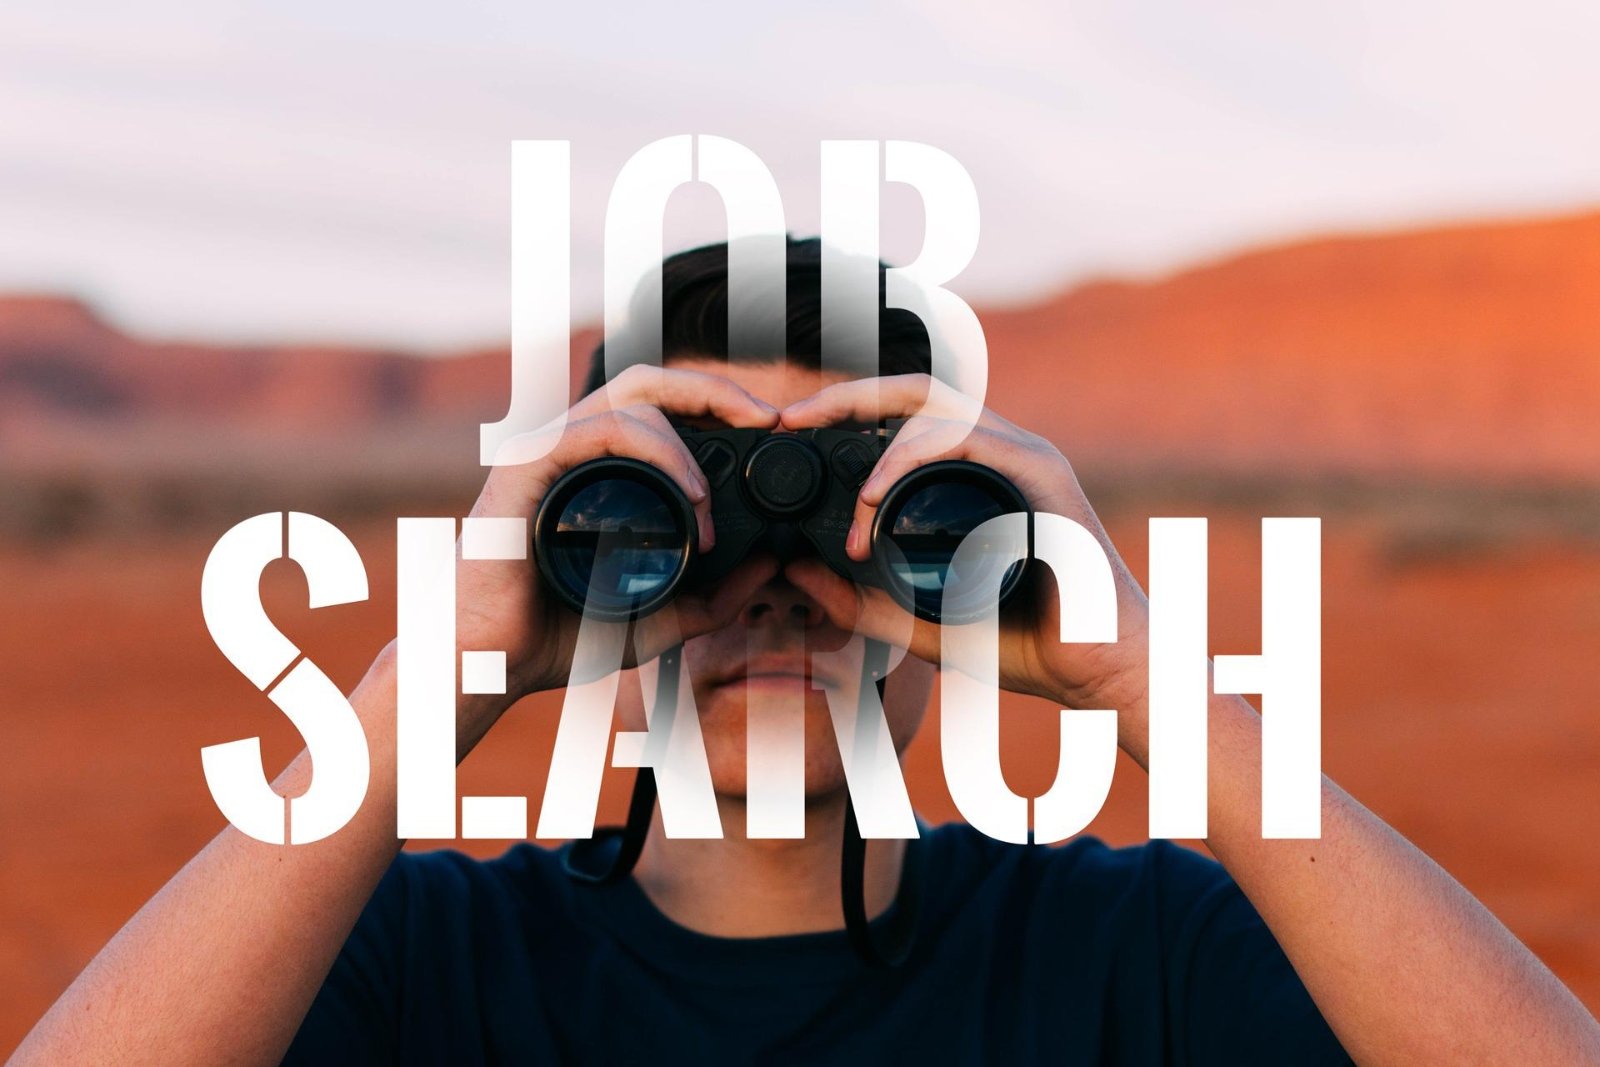 dream-job-g2e030ddb4_1920 (c) Pixabay